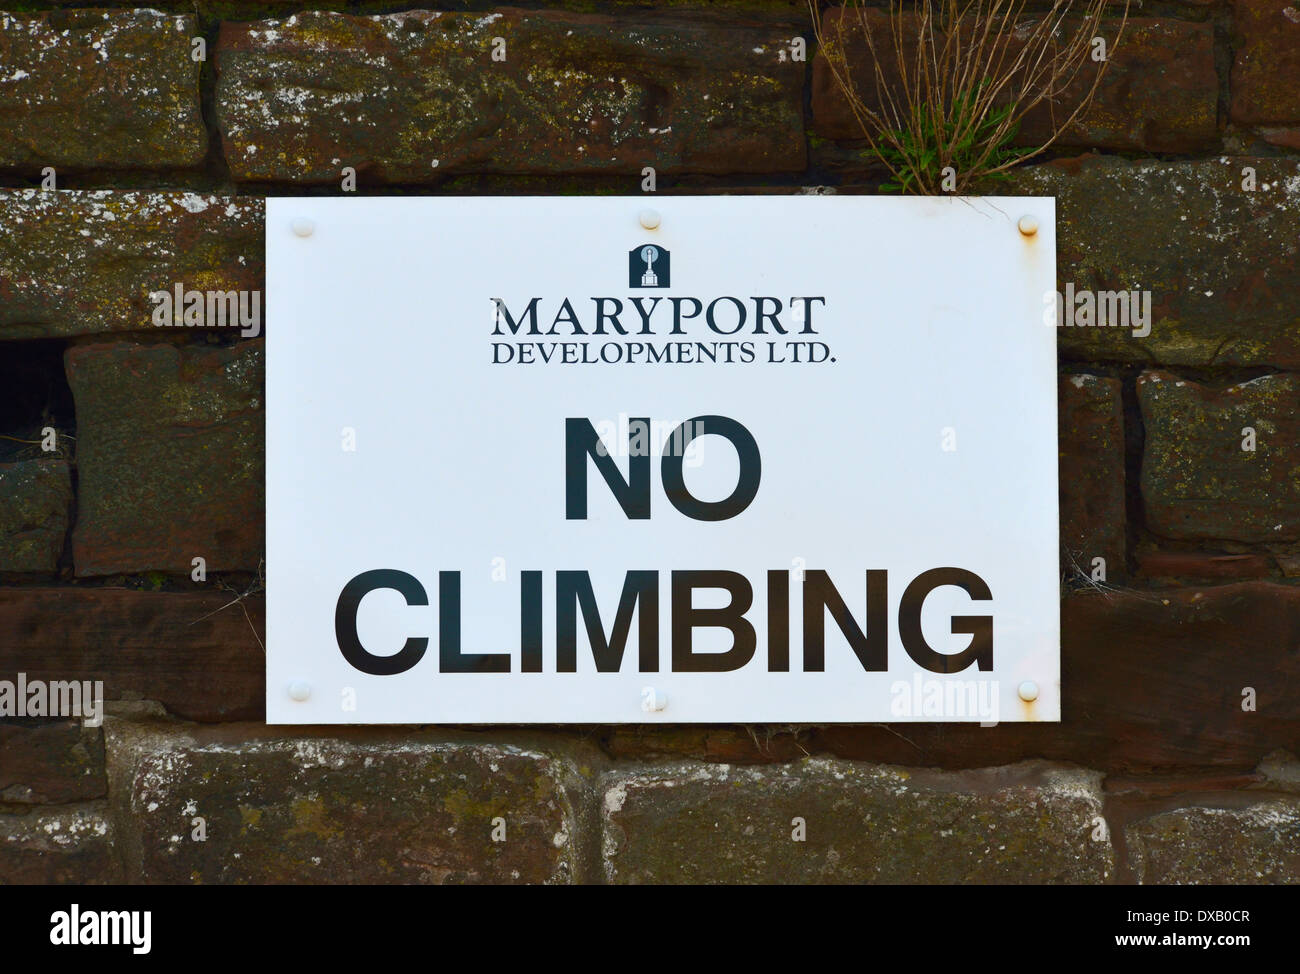 Warning sign, 'MARYPORT DEVELOPMENTS LTD. NO CLIMBING'  The Harbour, Maryport, Cumbria, England, United Kingdom, Europe. Stock Photo